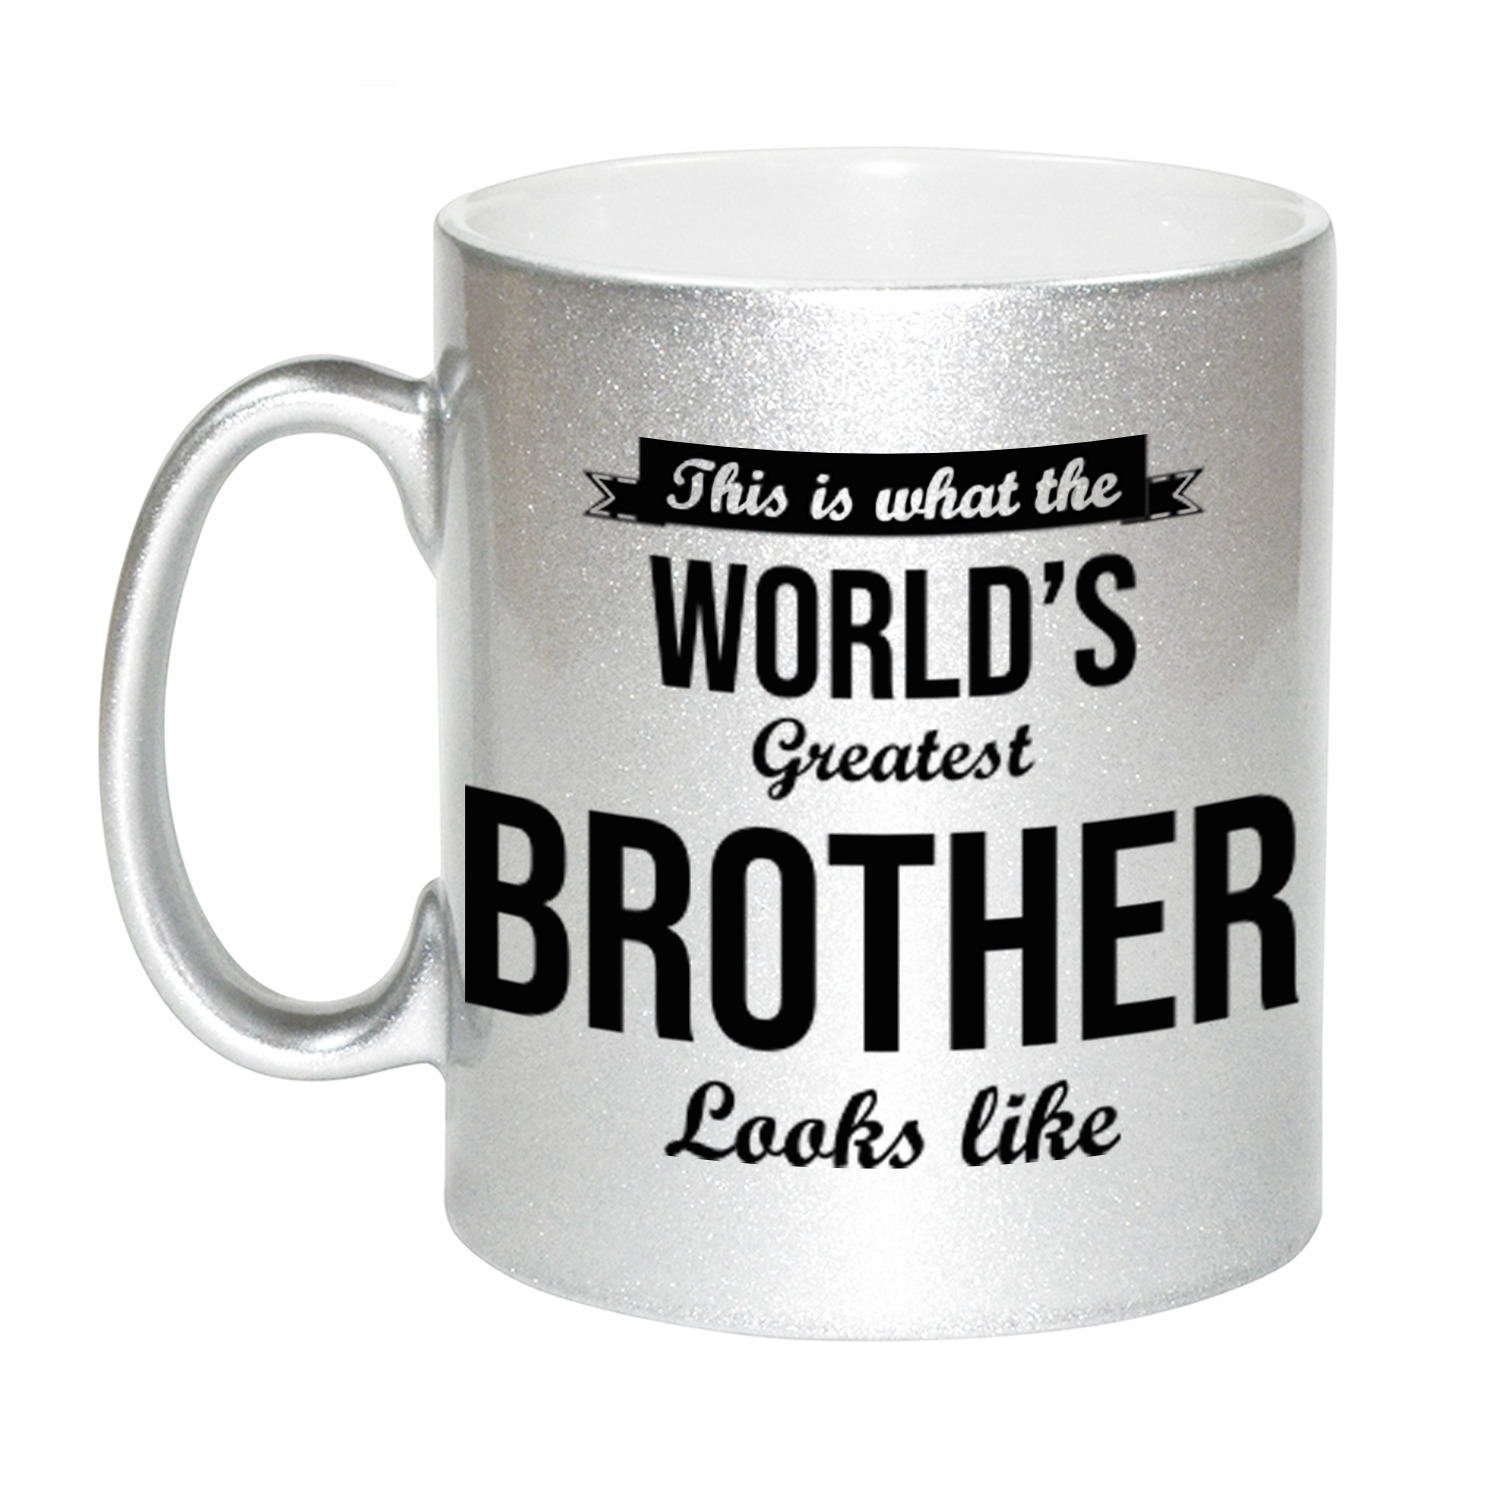 Zilveren Worlds Greatest Brother cadeau koffiemok / theebeker 330 ml